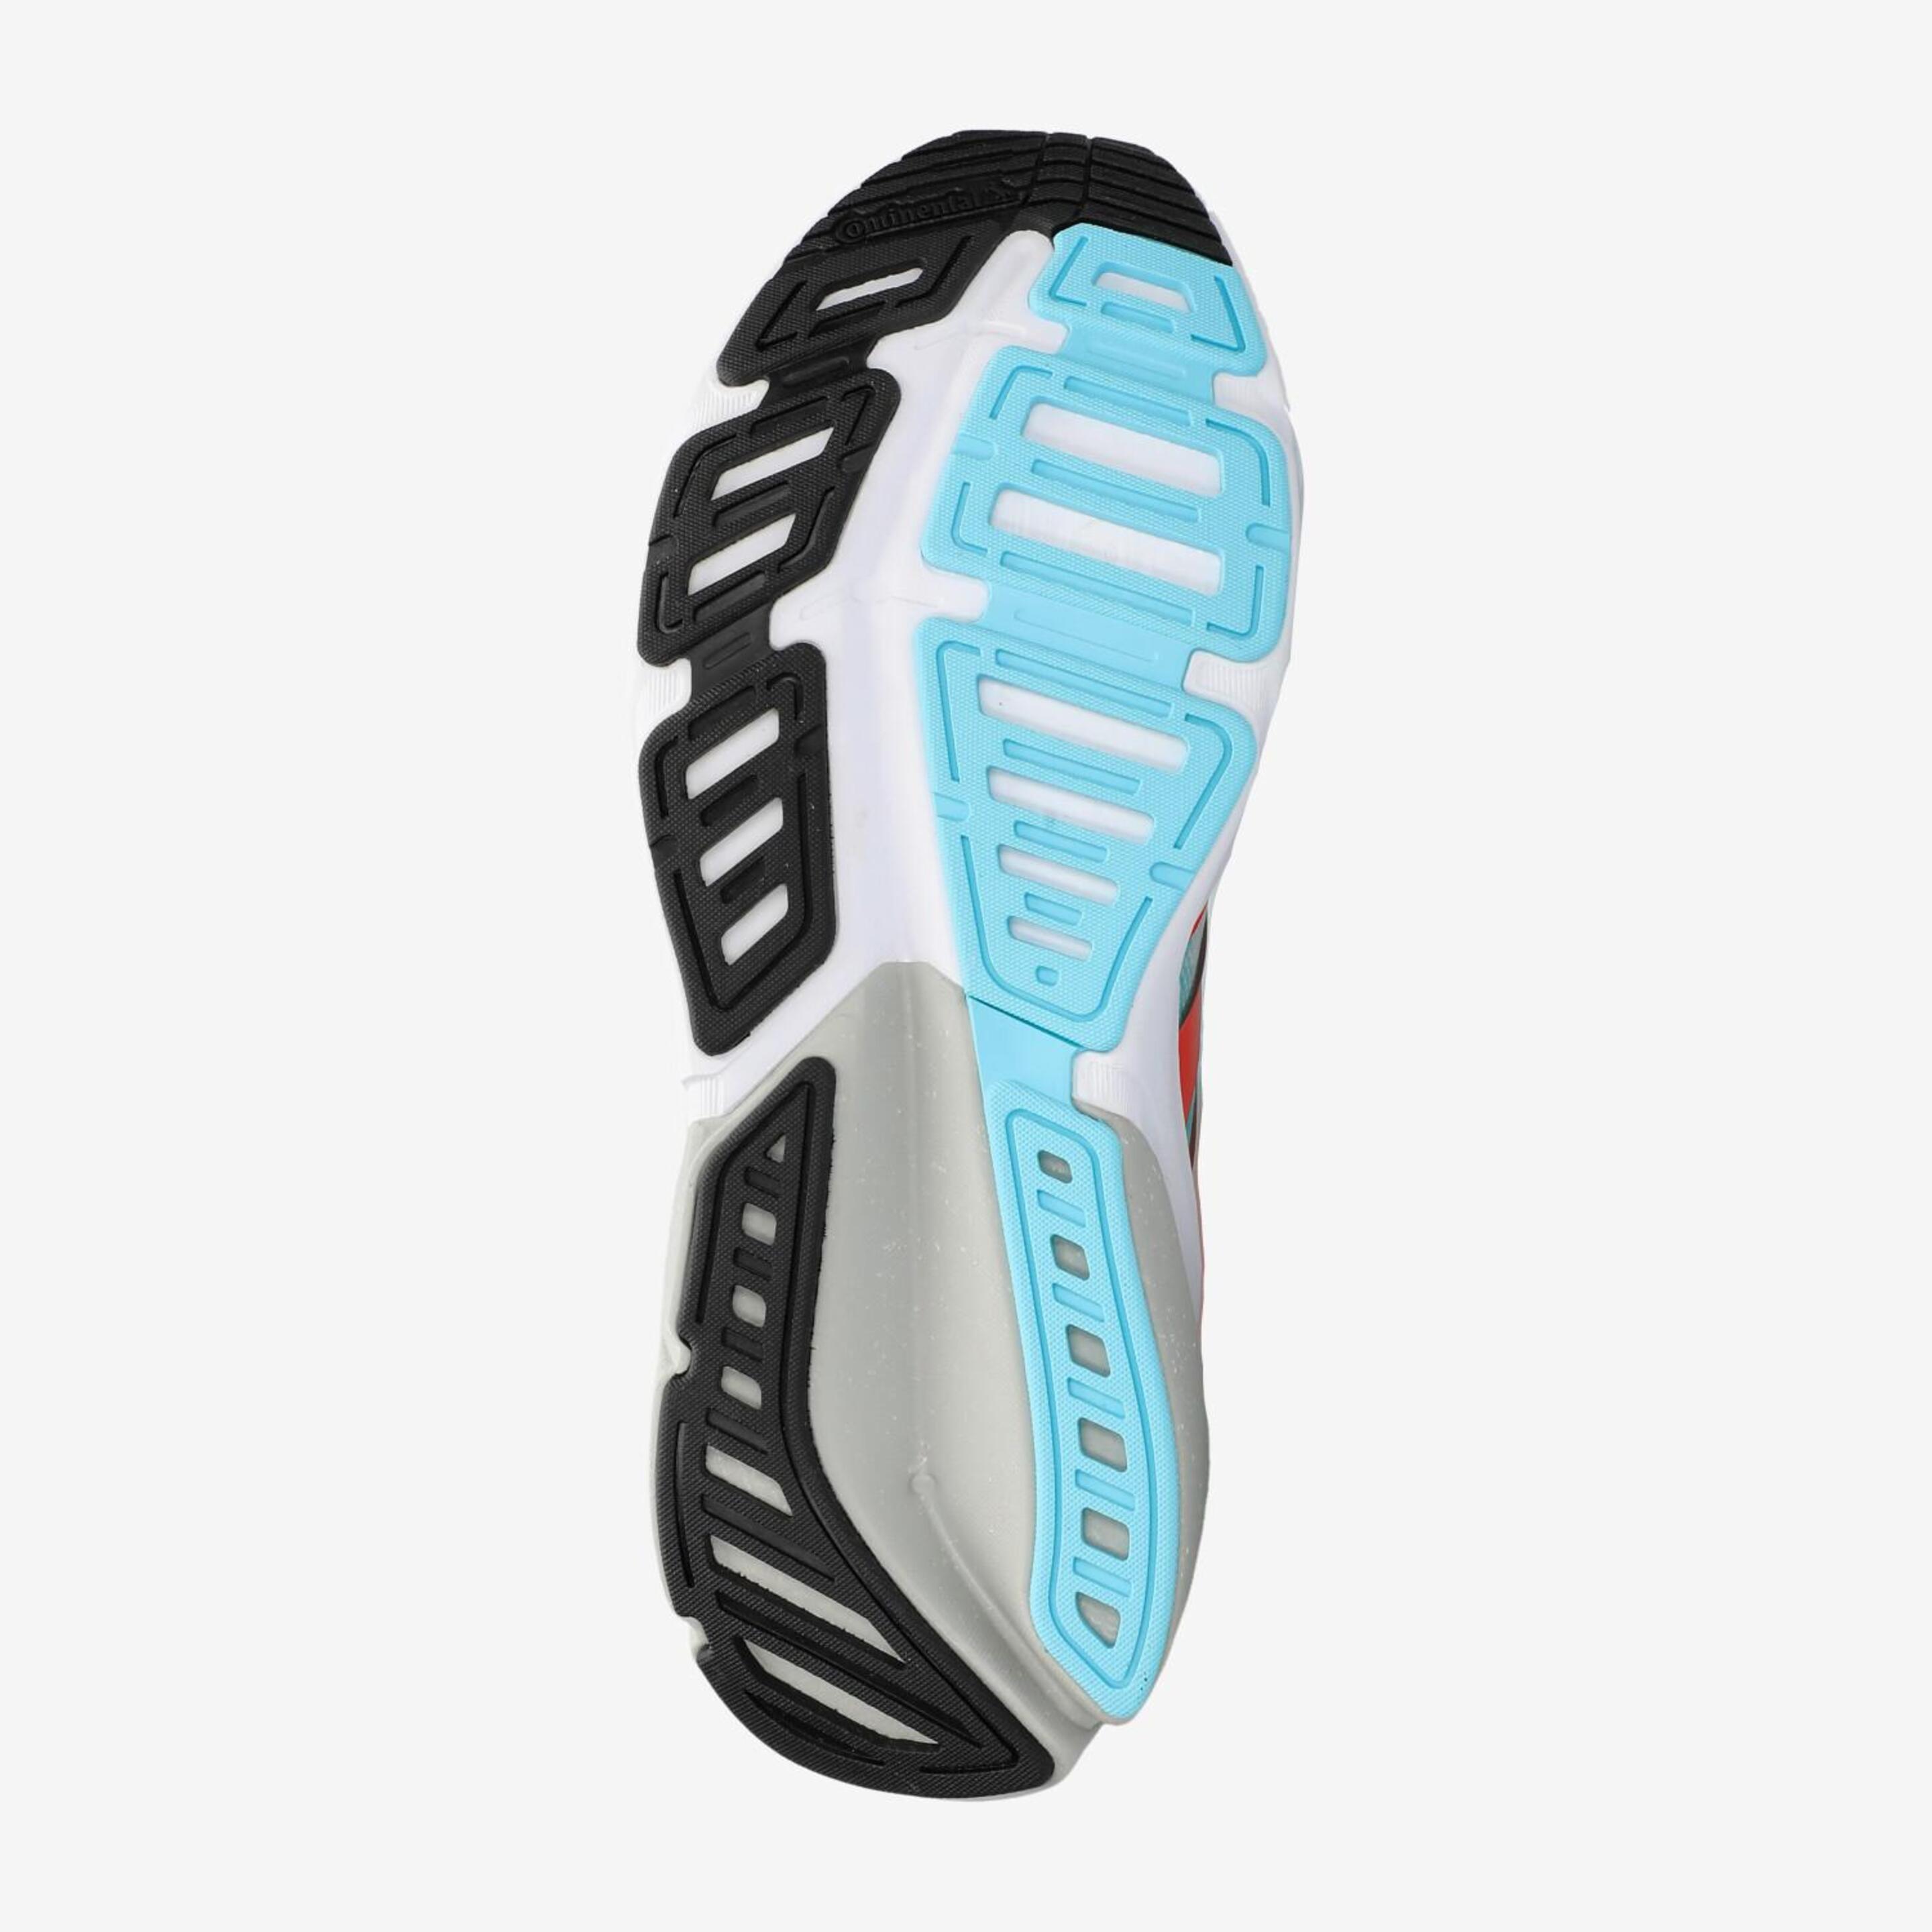 adidas Adistar 2 - Azul - Zapatillas Running Mujer